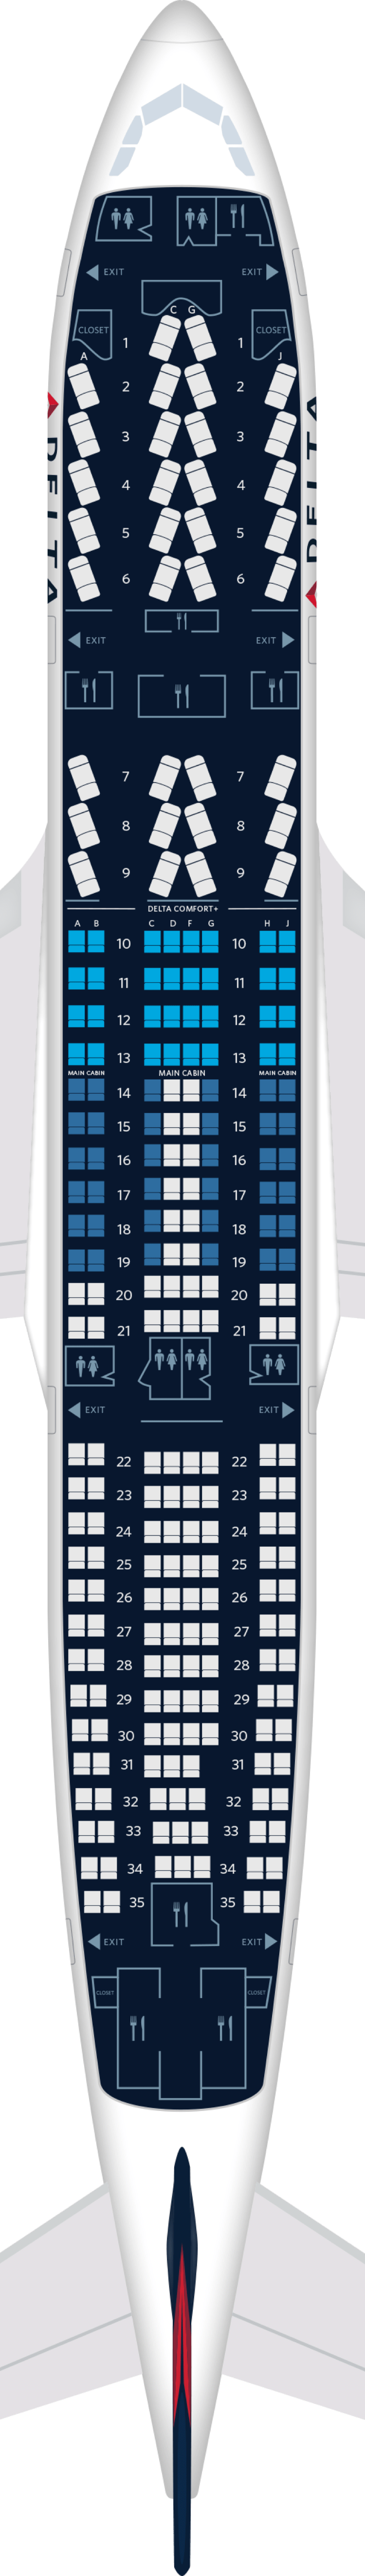 A330 seatguru eurowings Airbus A330